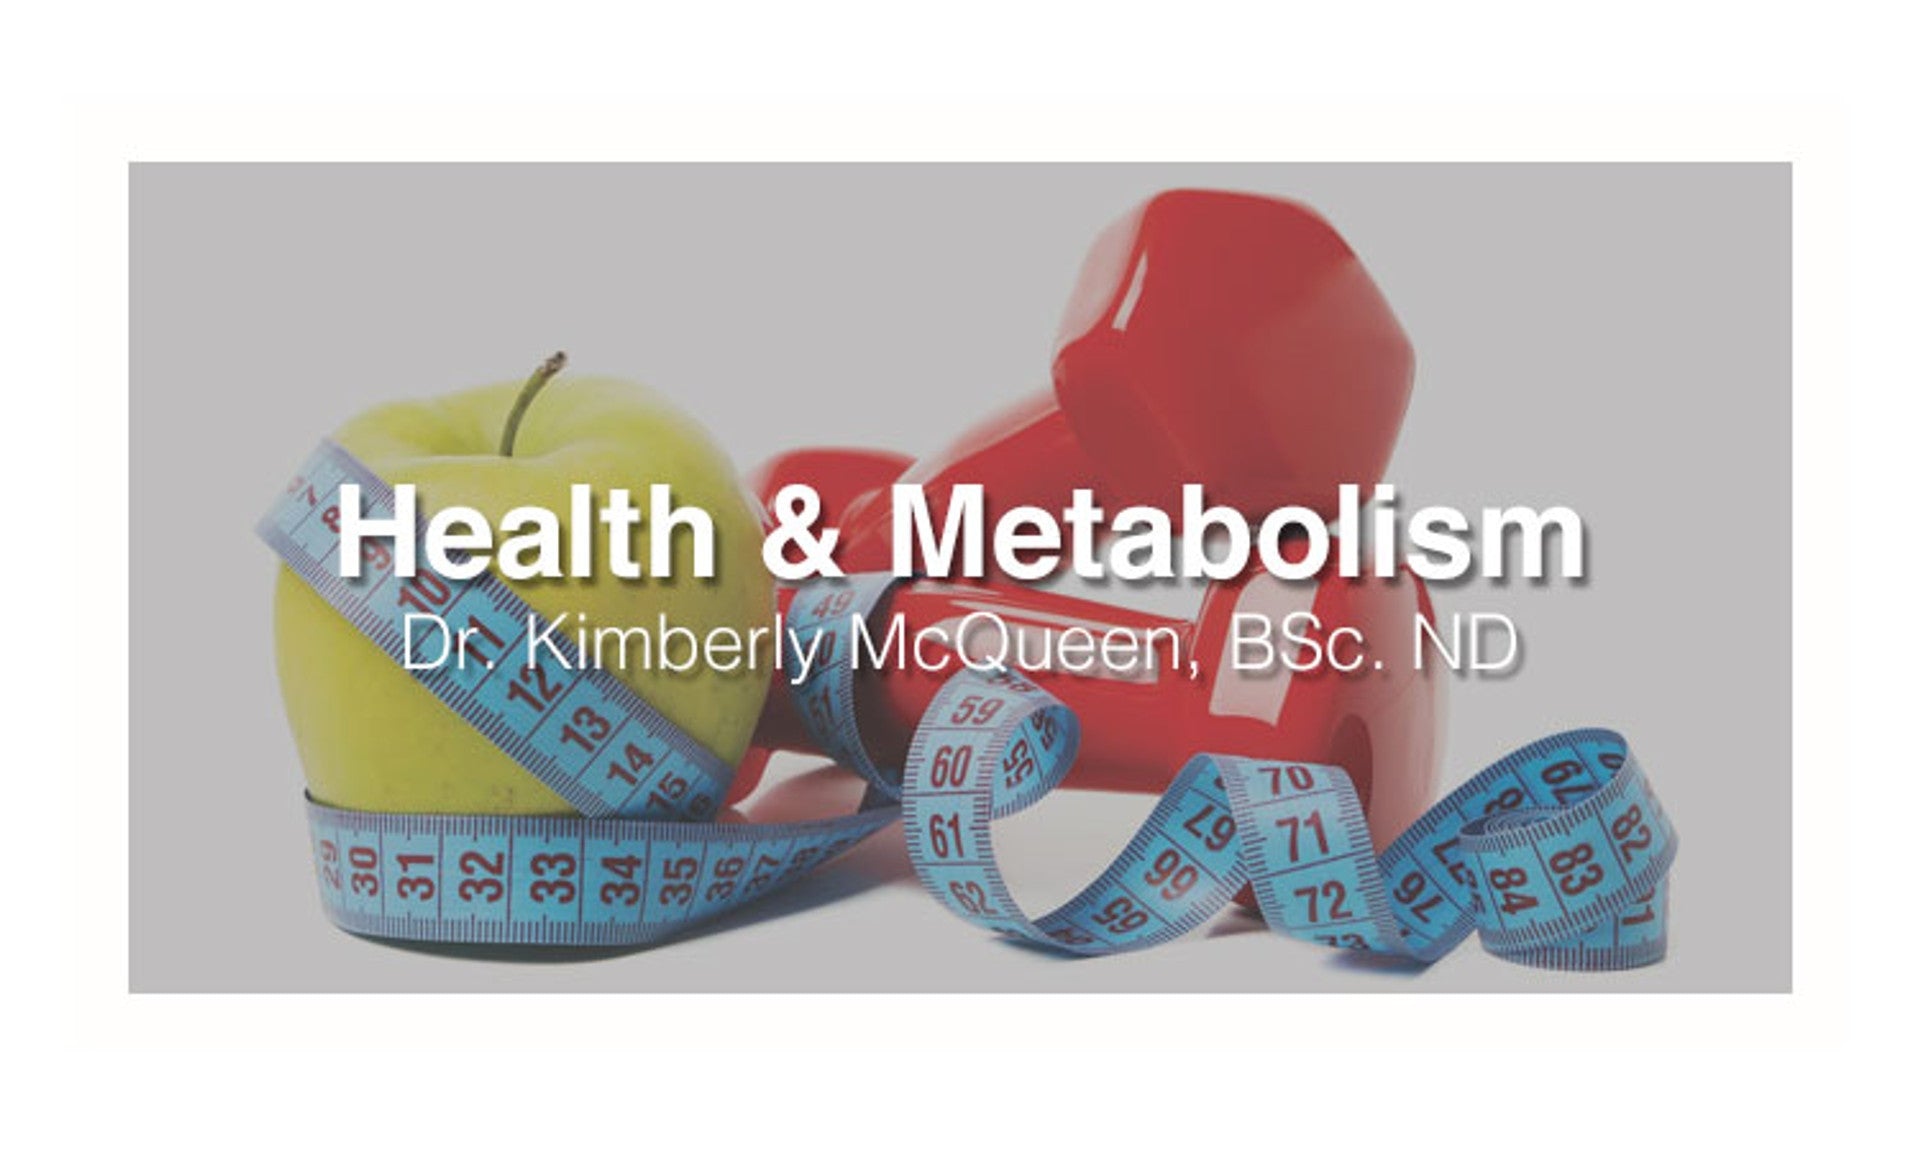 Health & Metabolism